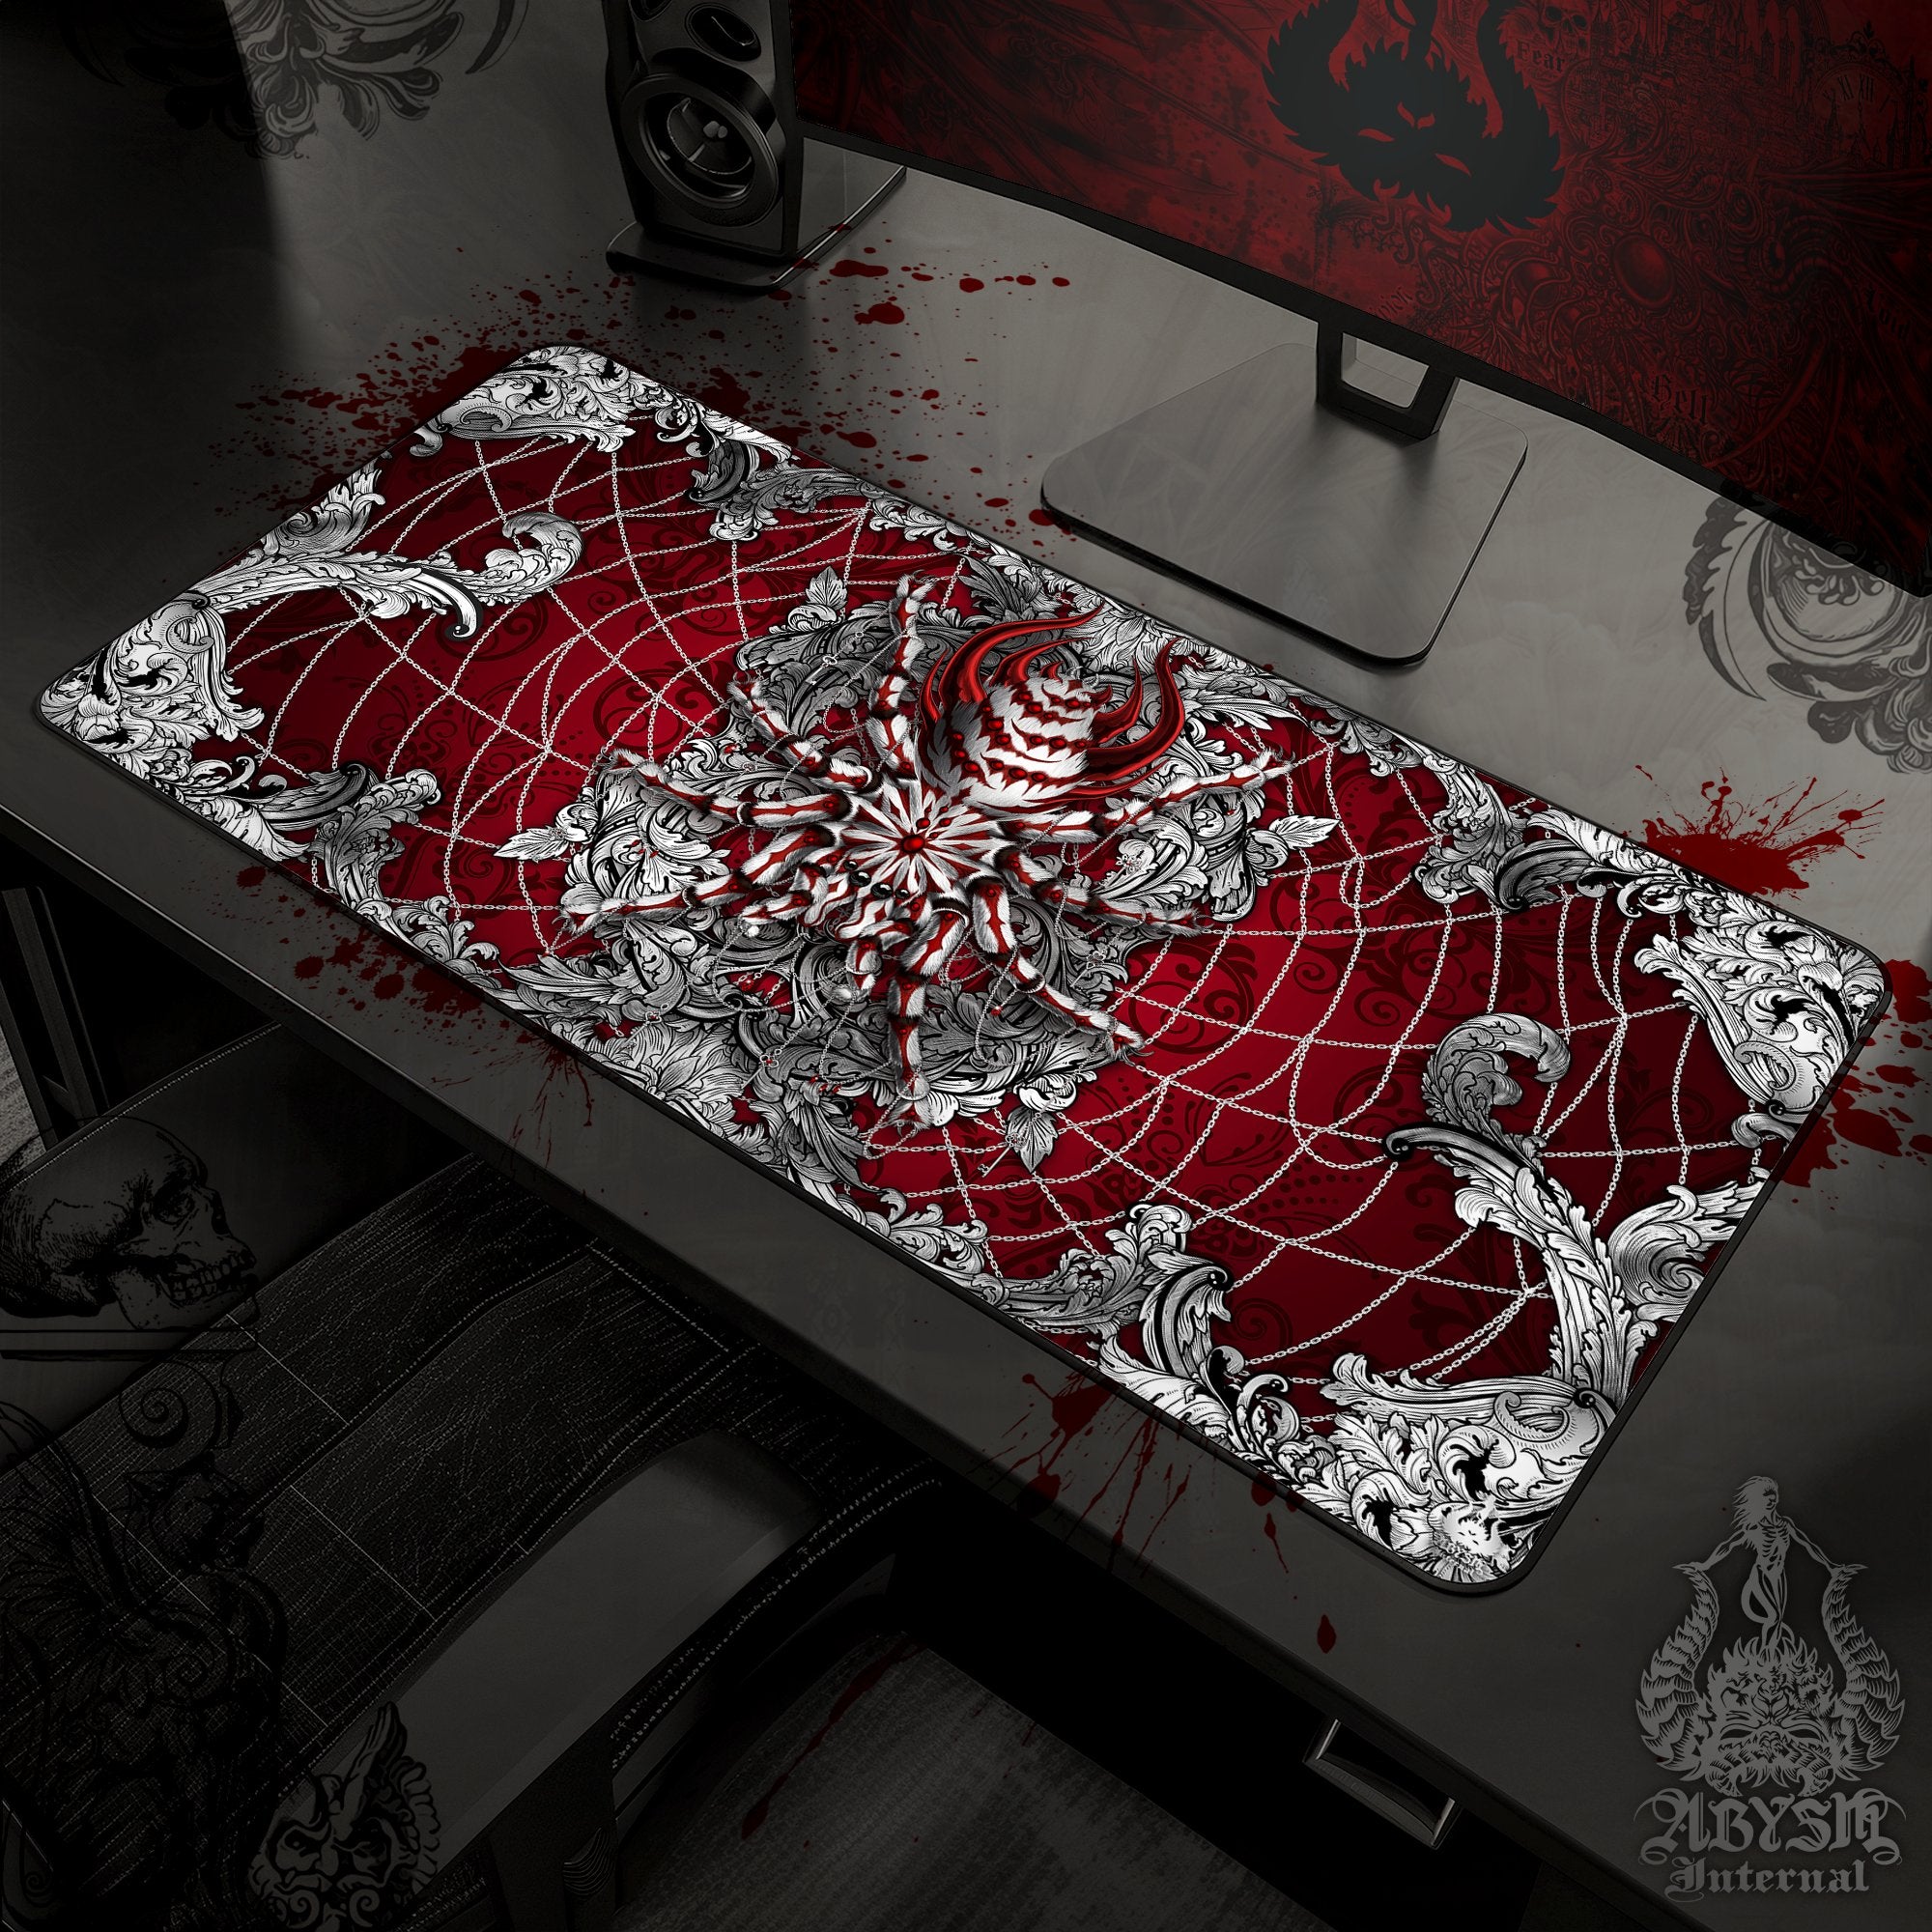 Tarantula Desk Mat, Spider Gaming Mouse Pad, Gamer Table Protector Cover, Silver Ornaments Workpad, Fantasy Art Print - 2 Colors - Abysm Internal